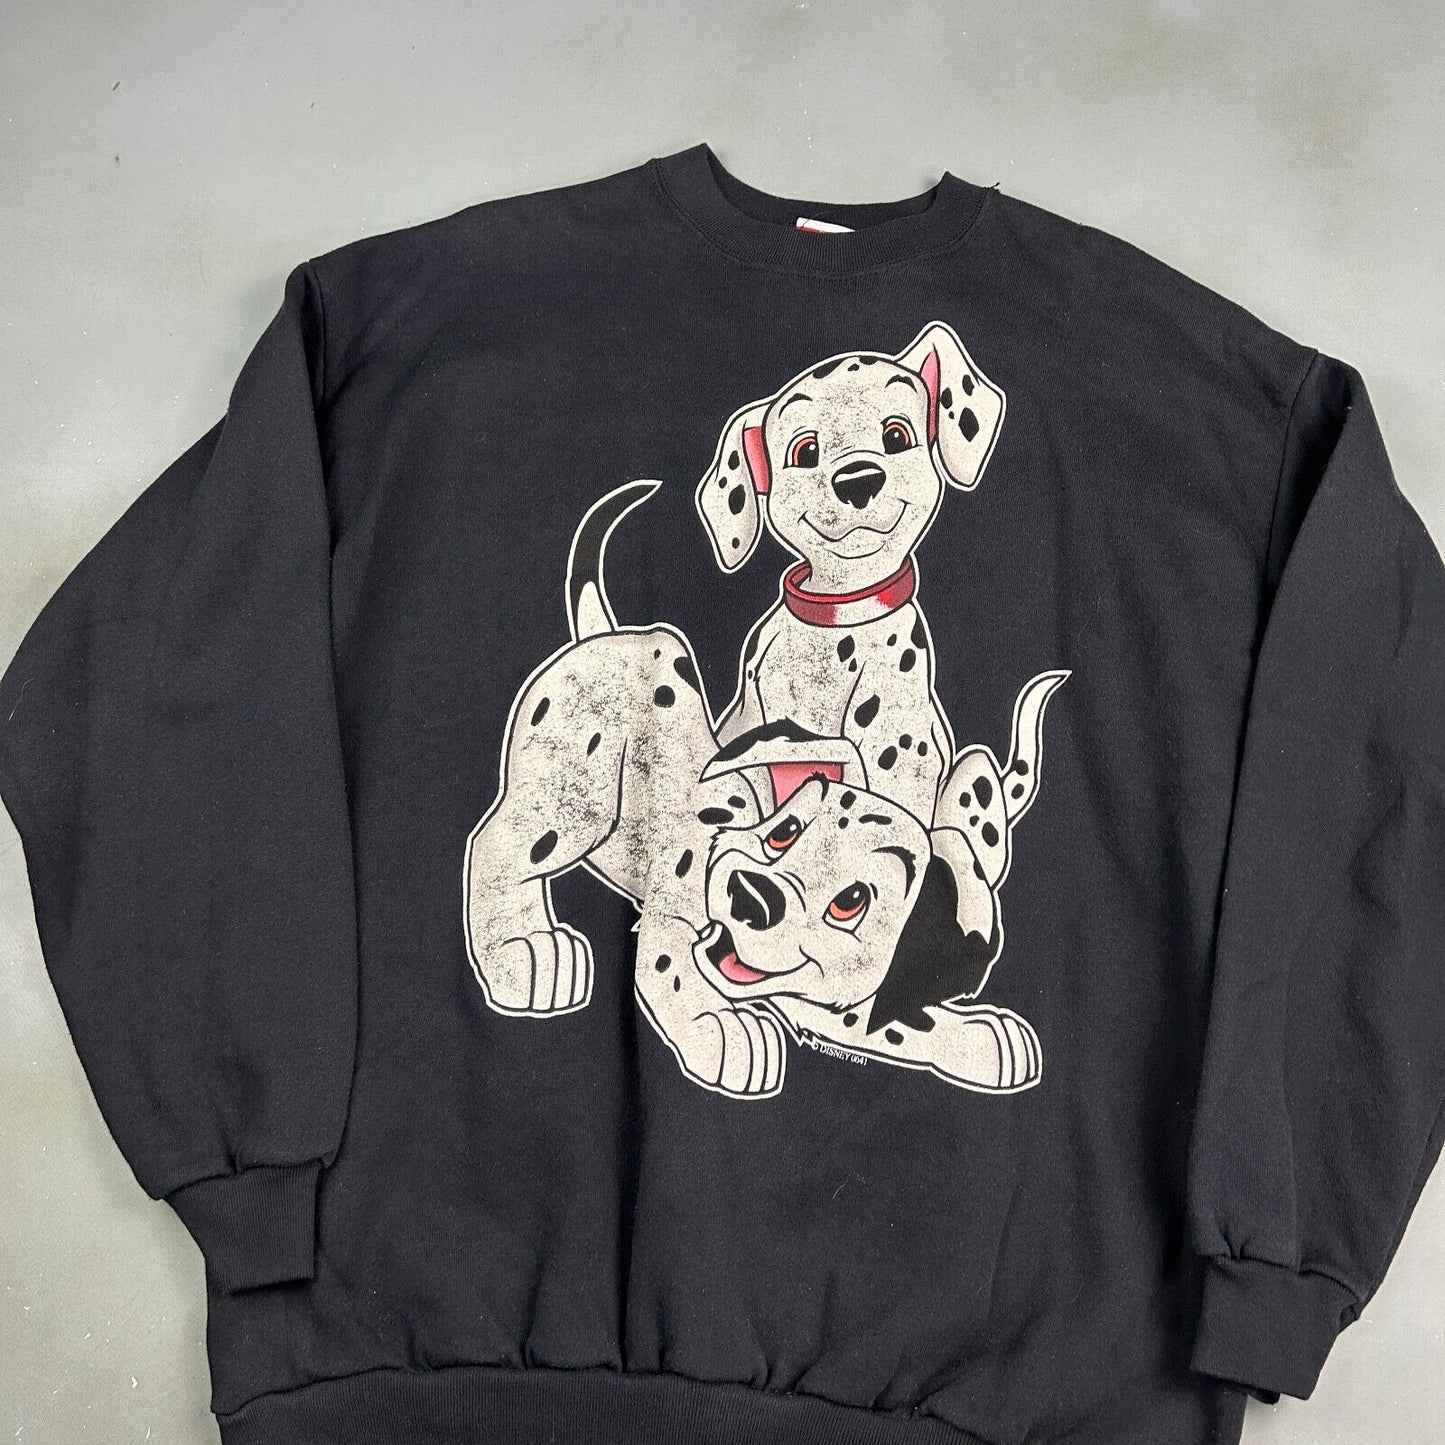 VINTAGE 90s Disney 101 Dalmatians Cartoon Crewneck Sweater sz Large Adult